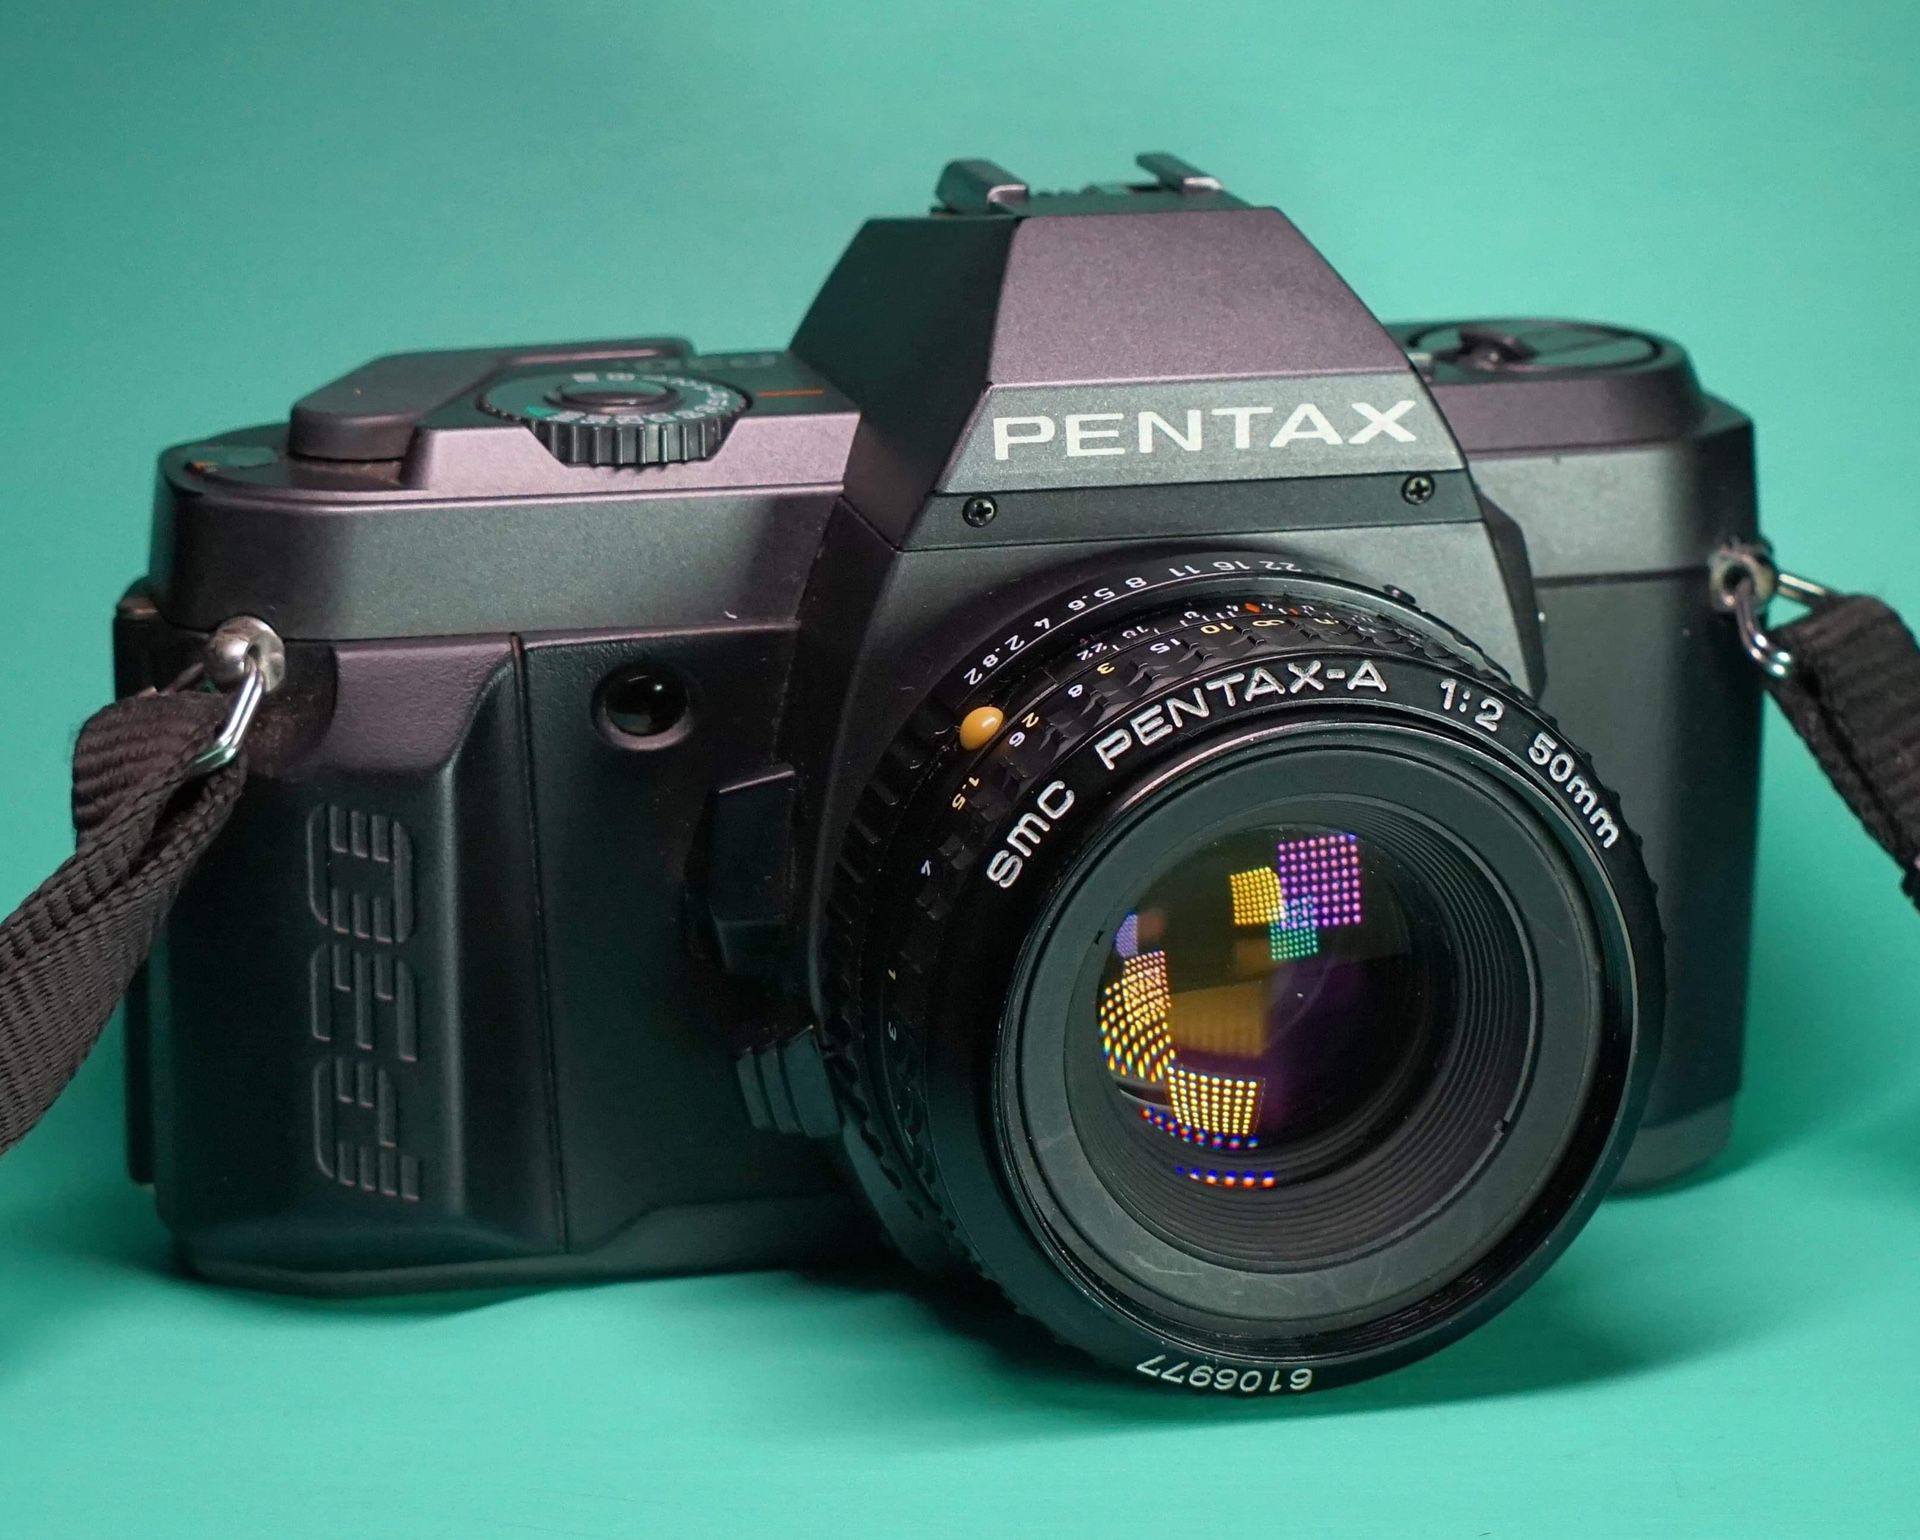 Pentax P30 Camera and lens.